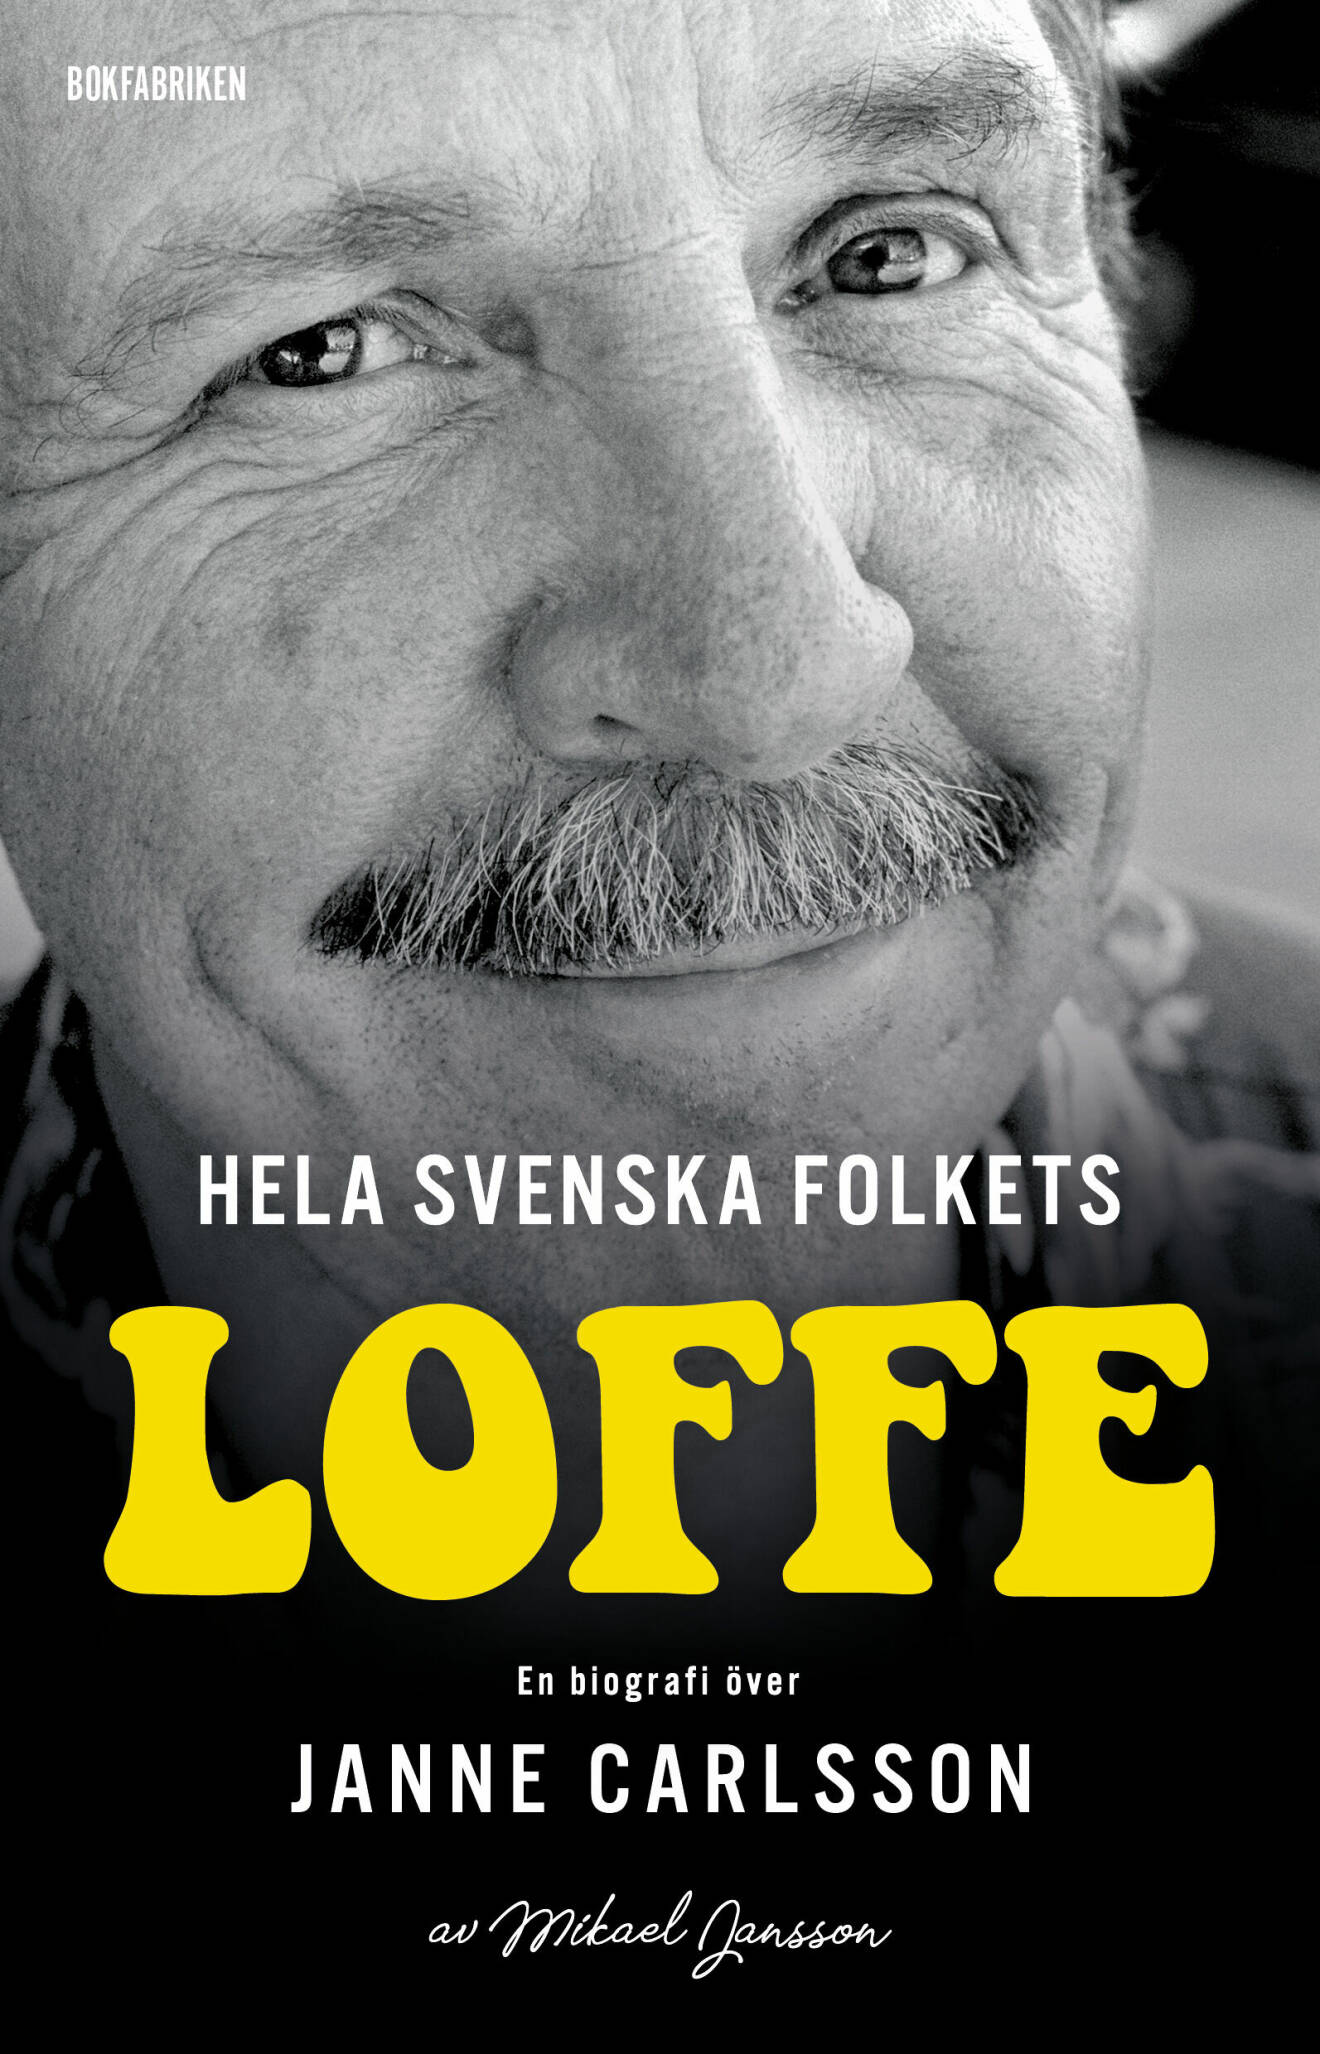 Biografin om Janne "Loffe" Carlsson